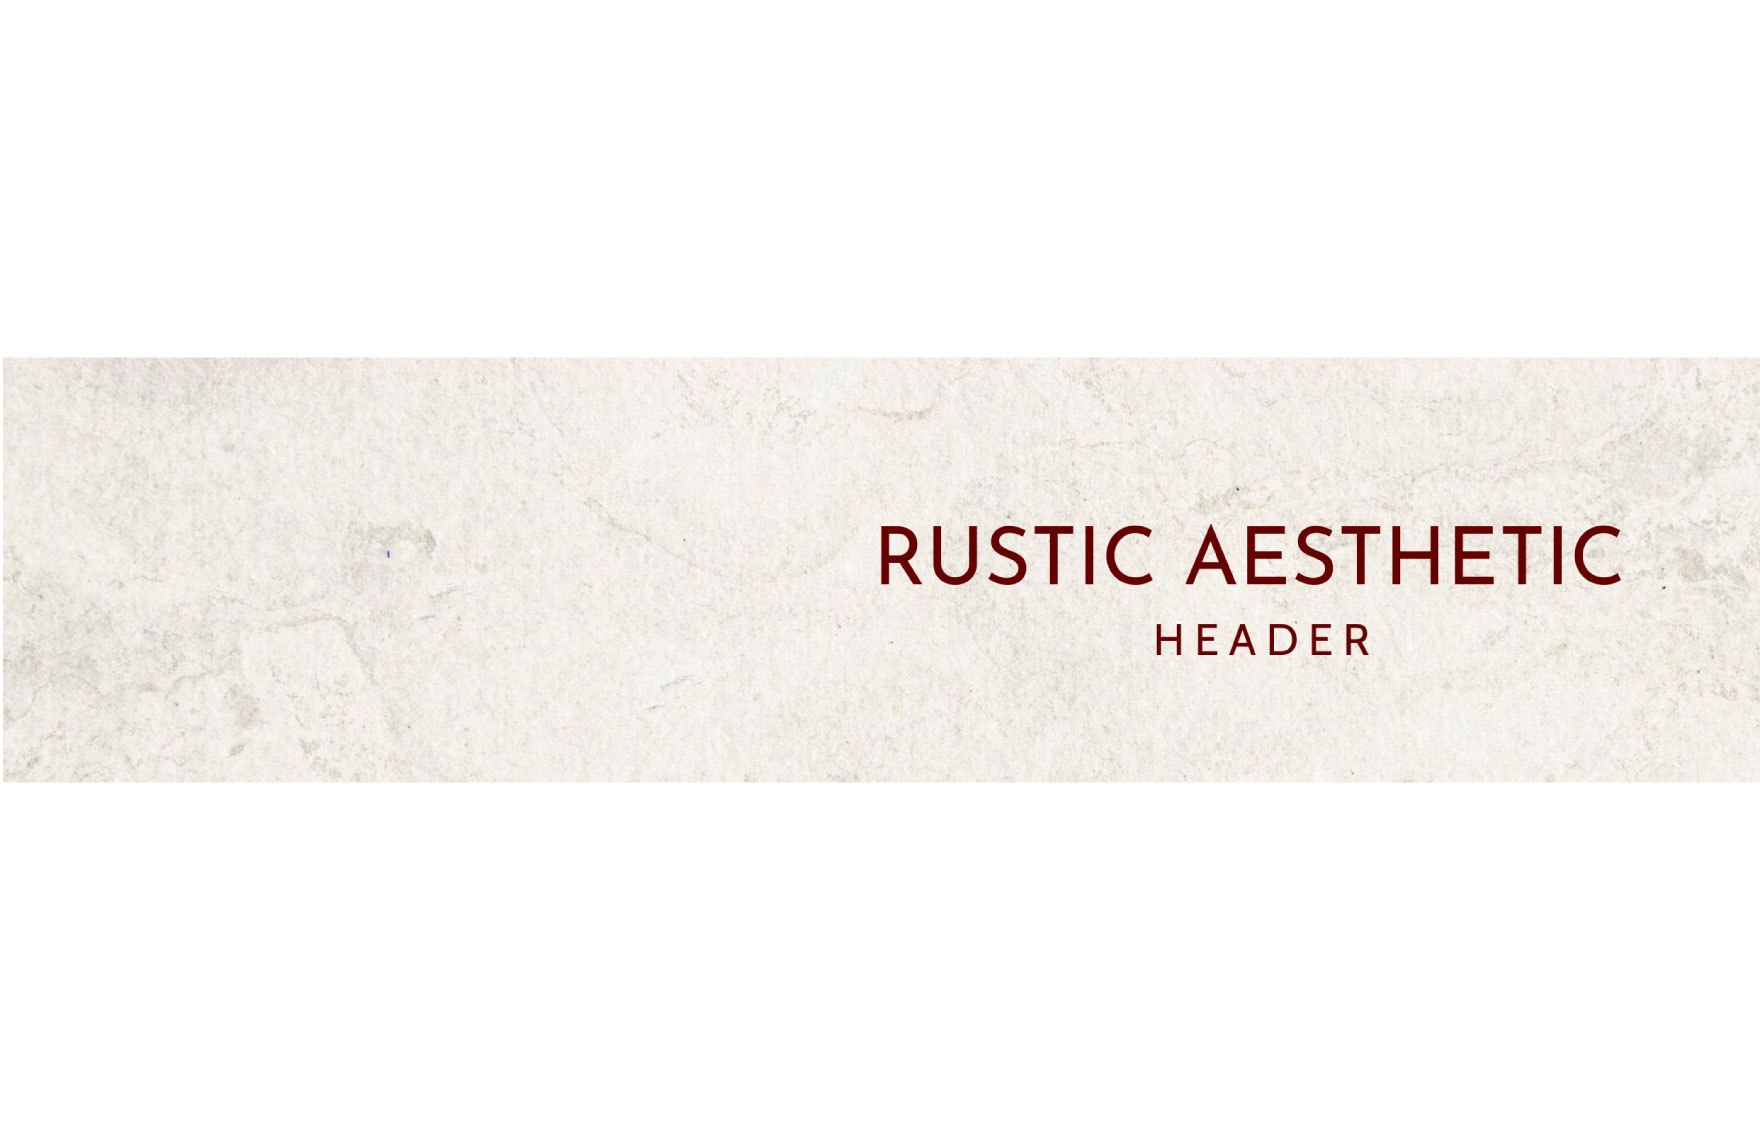 Rustic Aesthetic Header Template